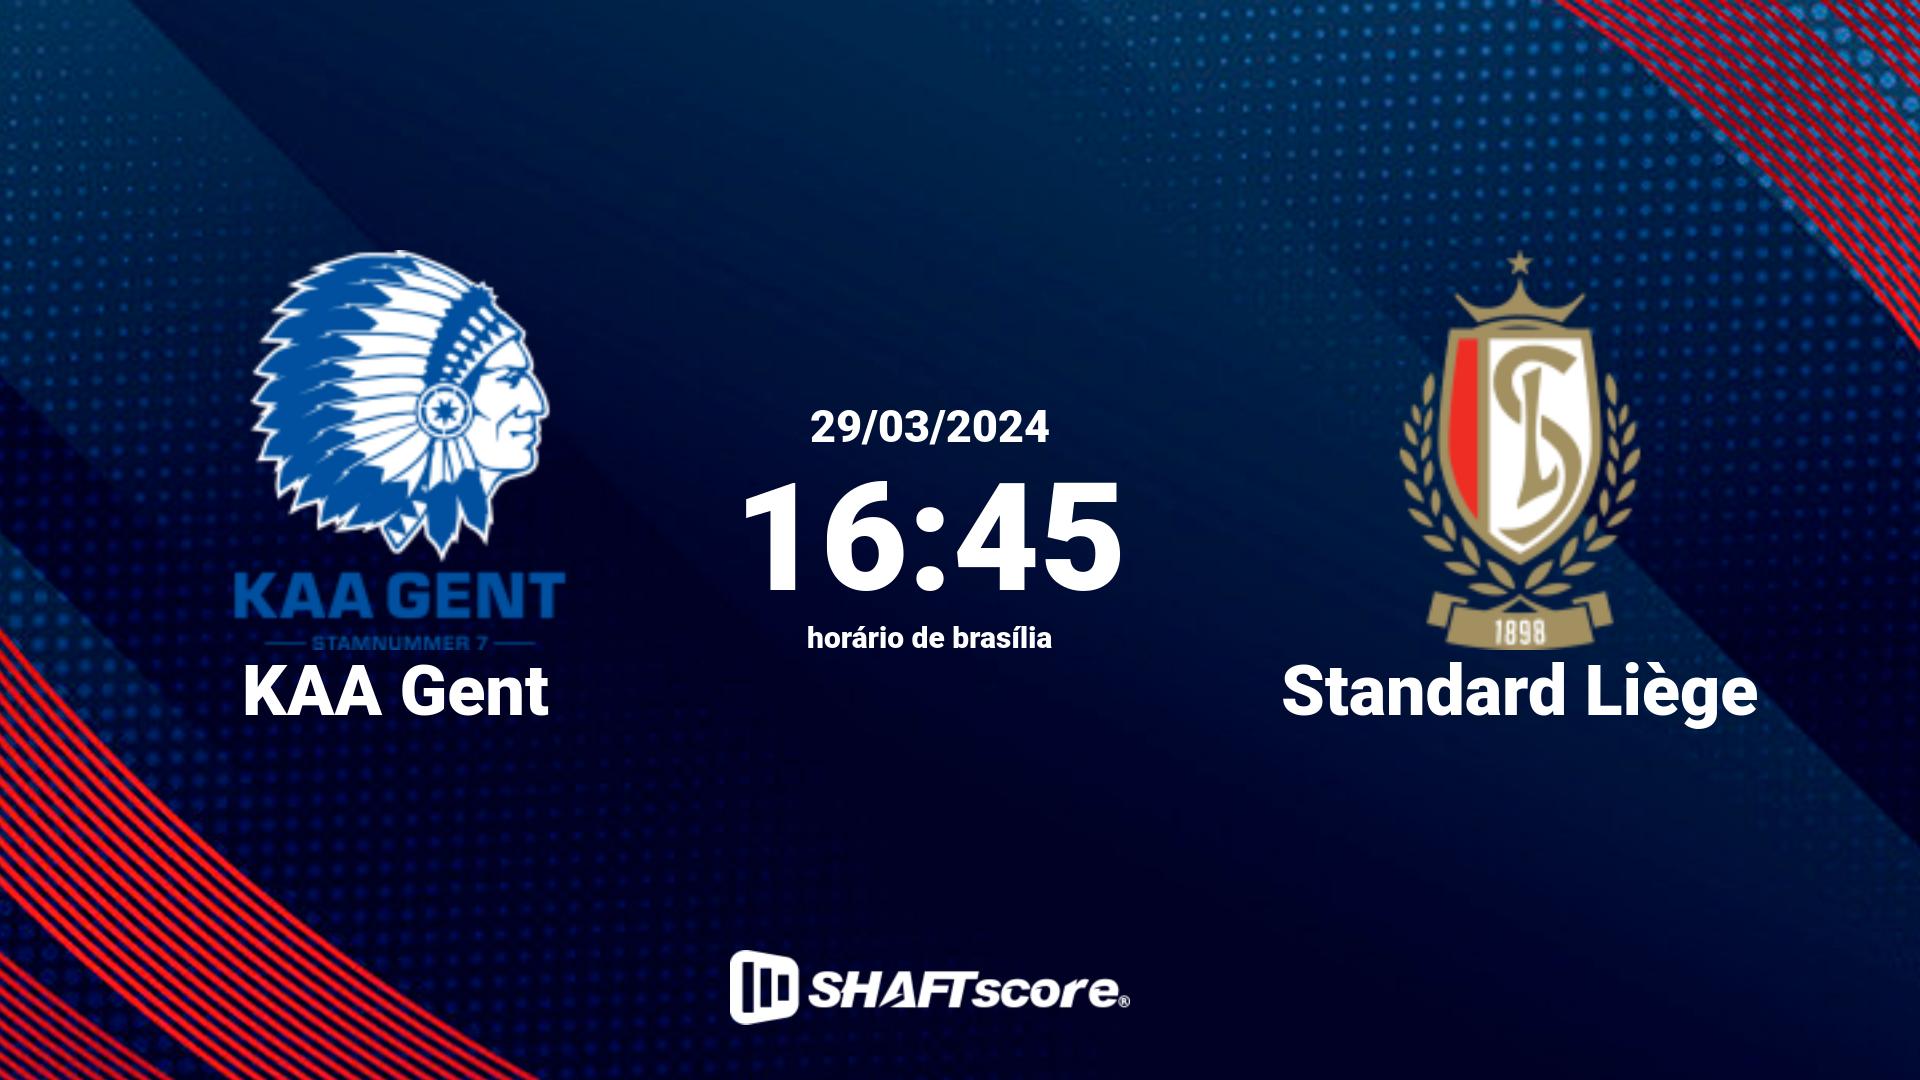 Estatísticas do jogo KAA Gent vs Standard Liège 29.03 16:45